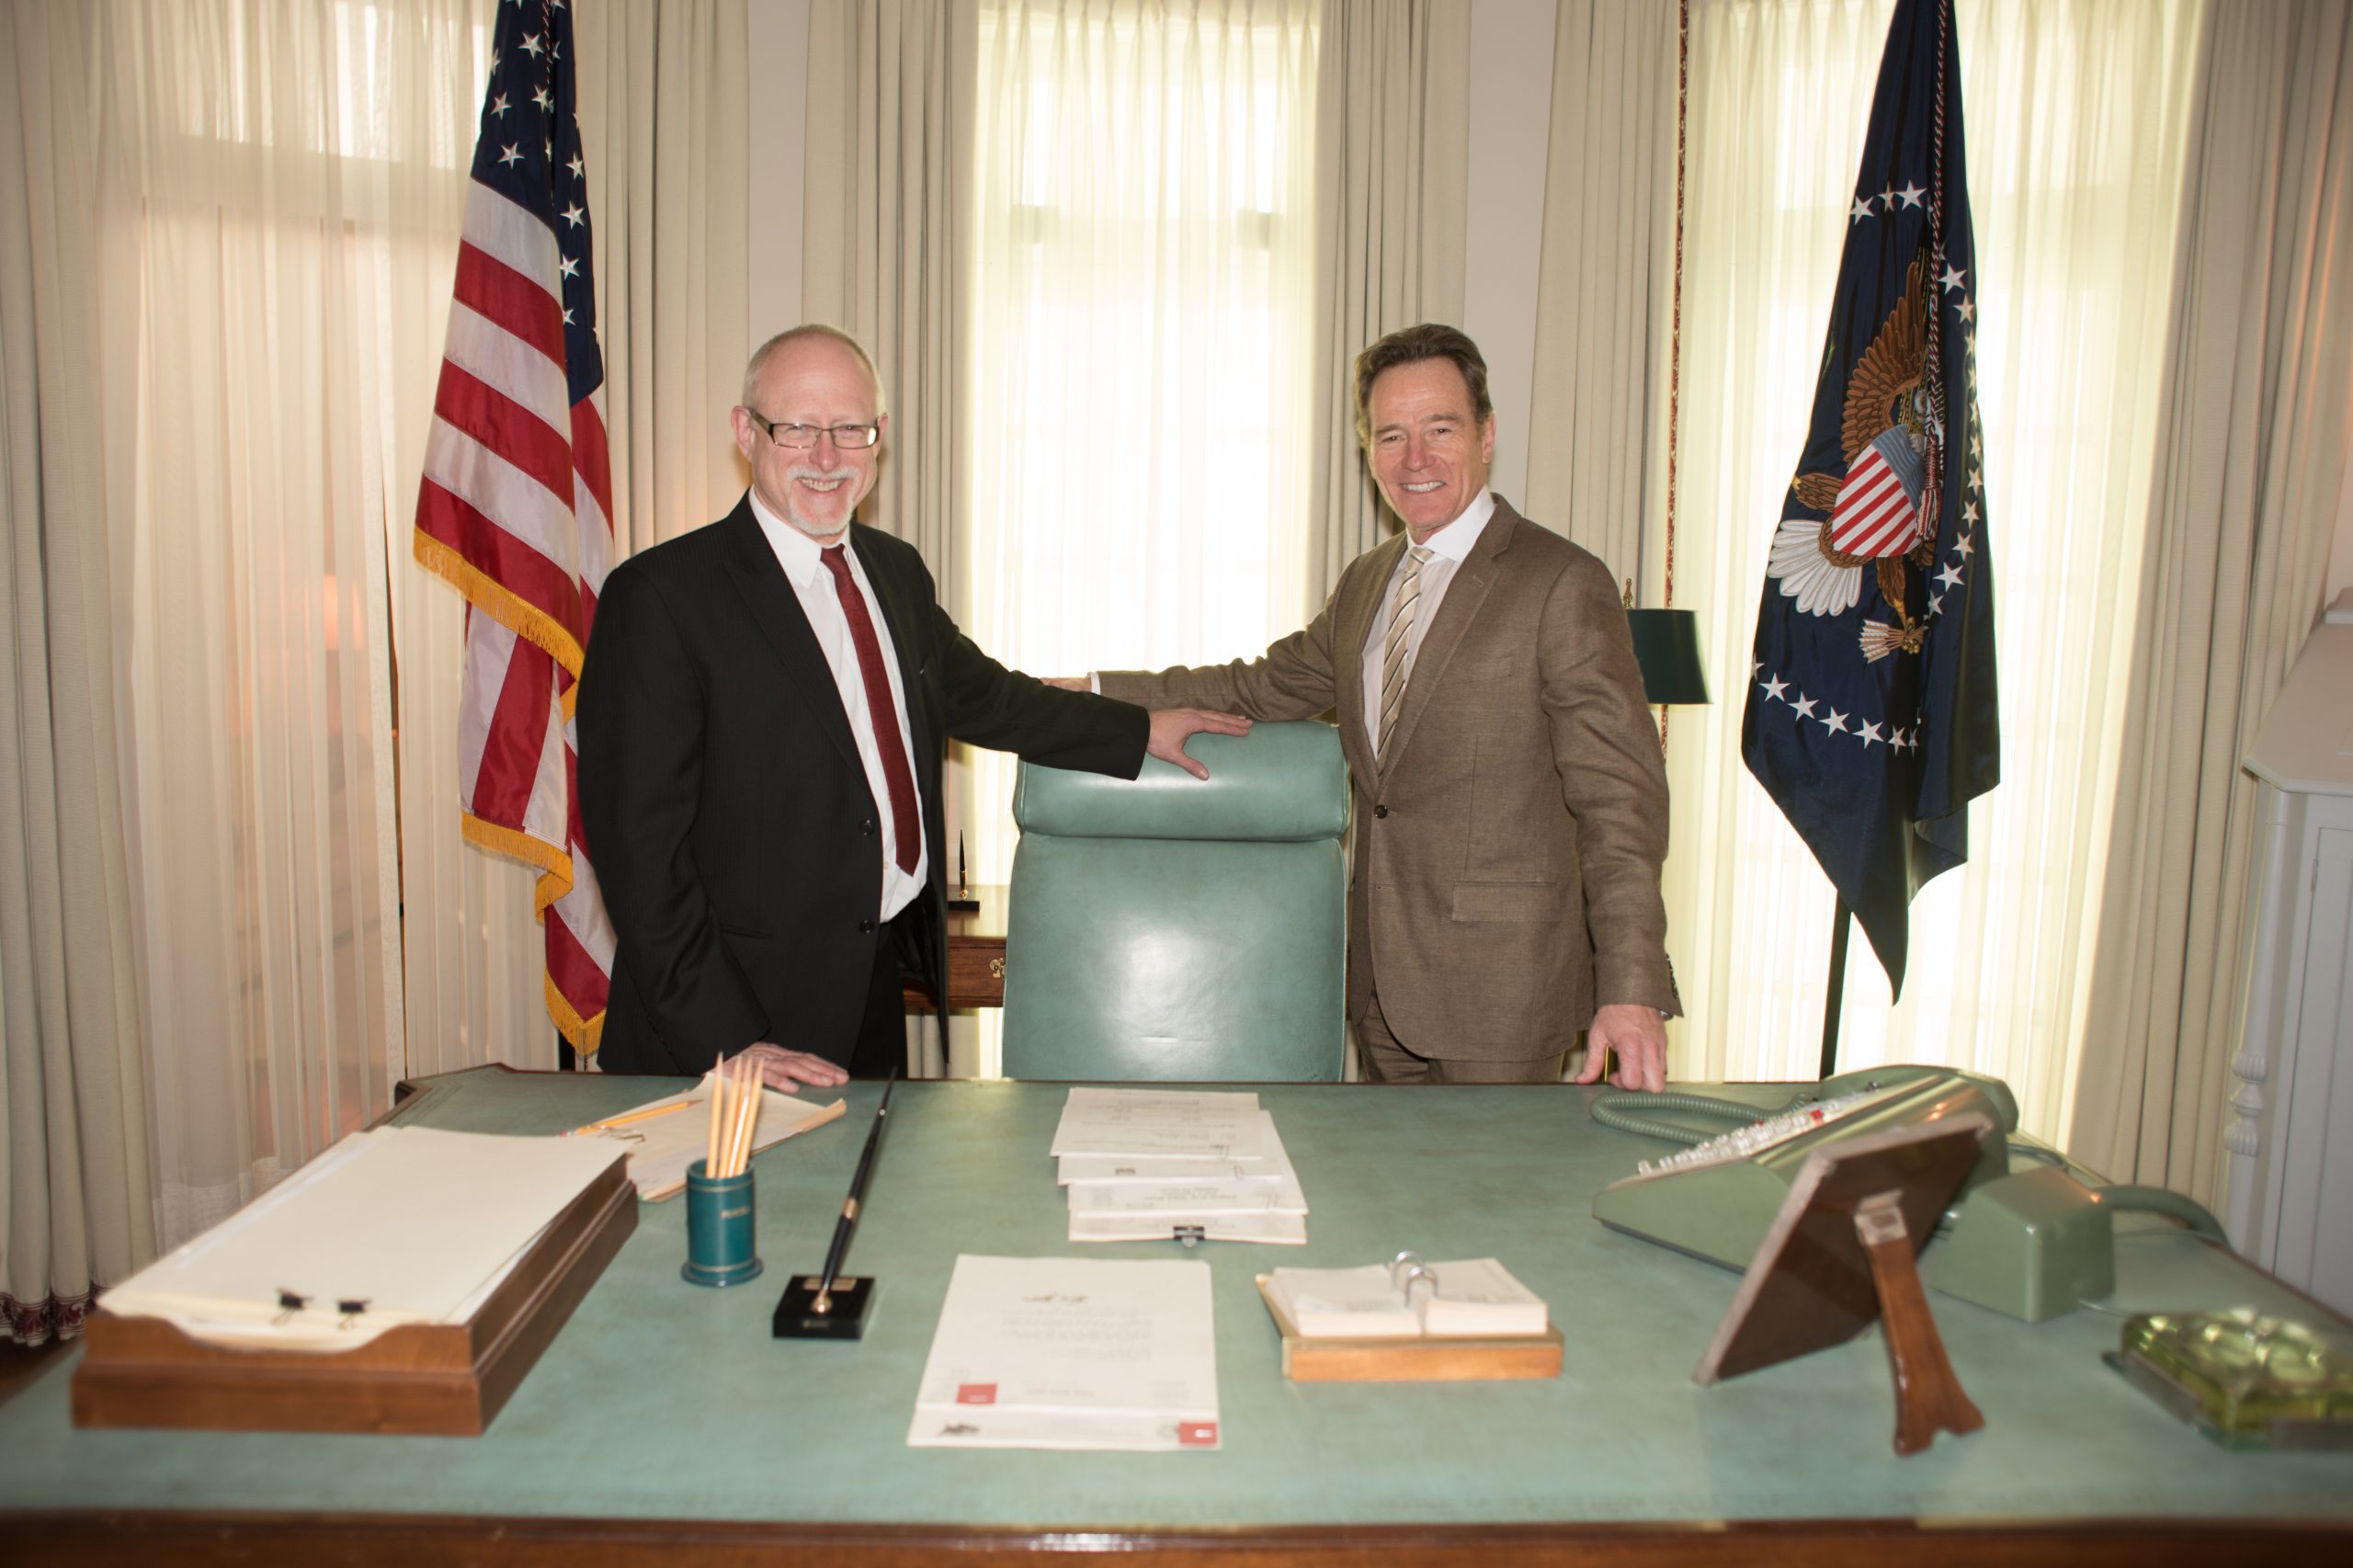 Bryan Cranston and Robert Schenkkan in the Oval Office